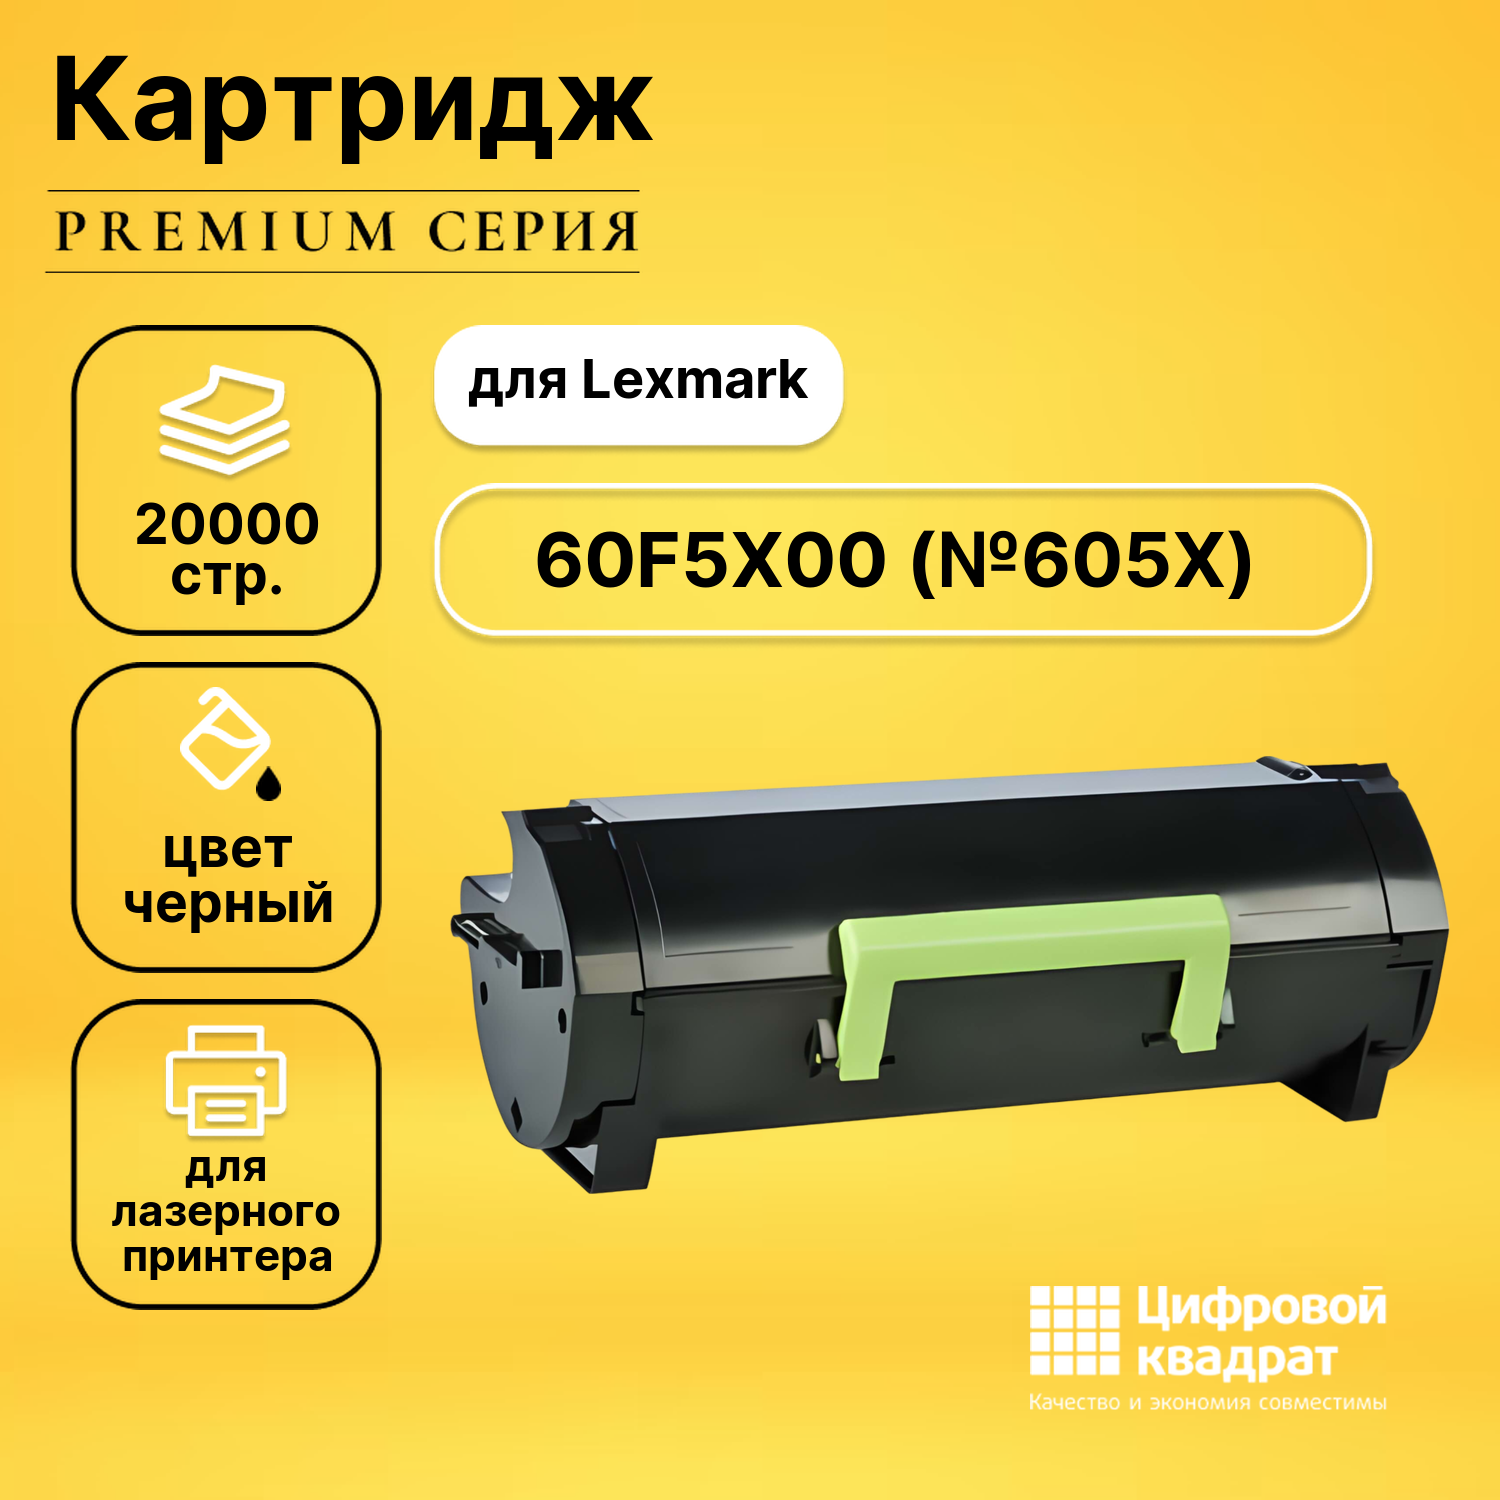 Картридж DS 60F5X00 Lexmark №605X совместимый